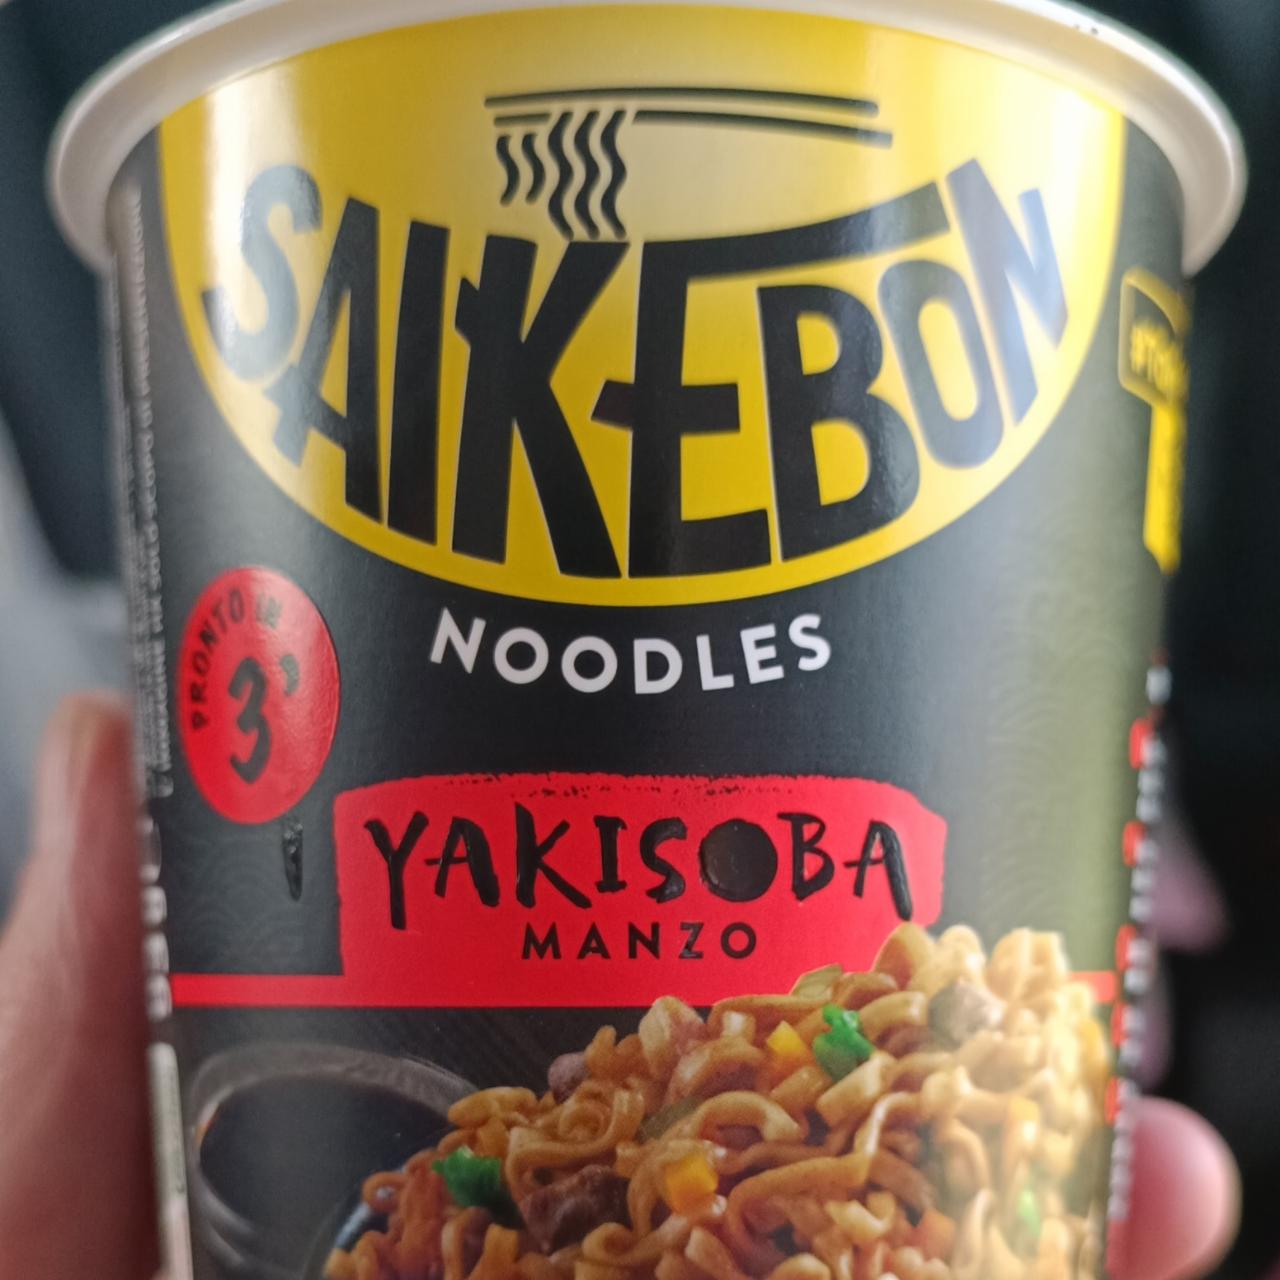 Fotografie - Noodles yakisoba manzo Saikebon